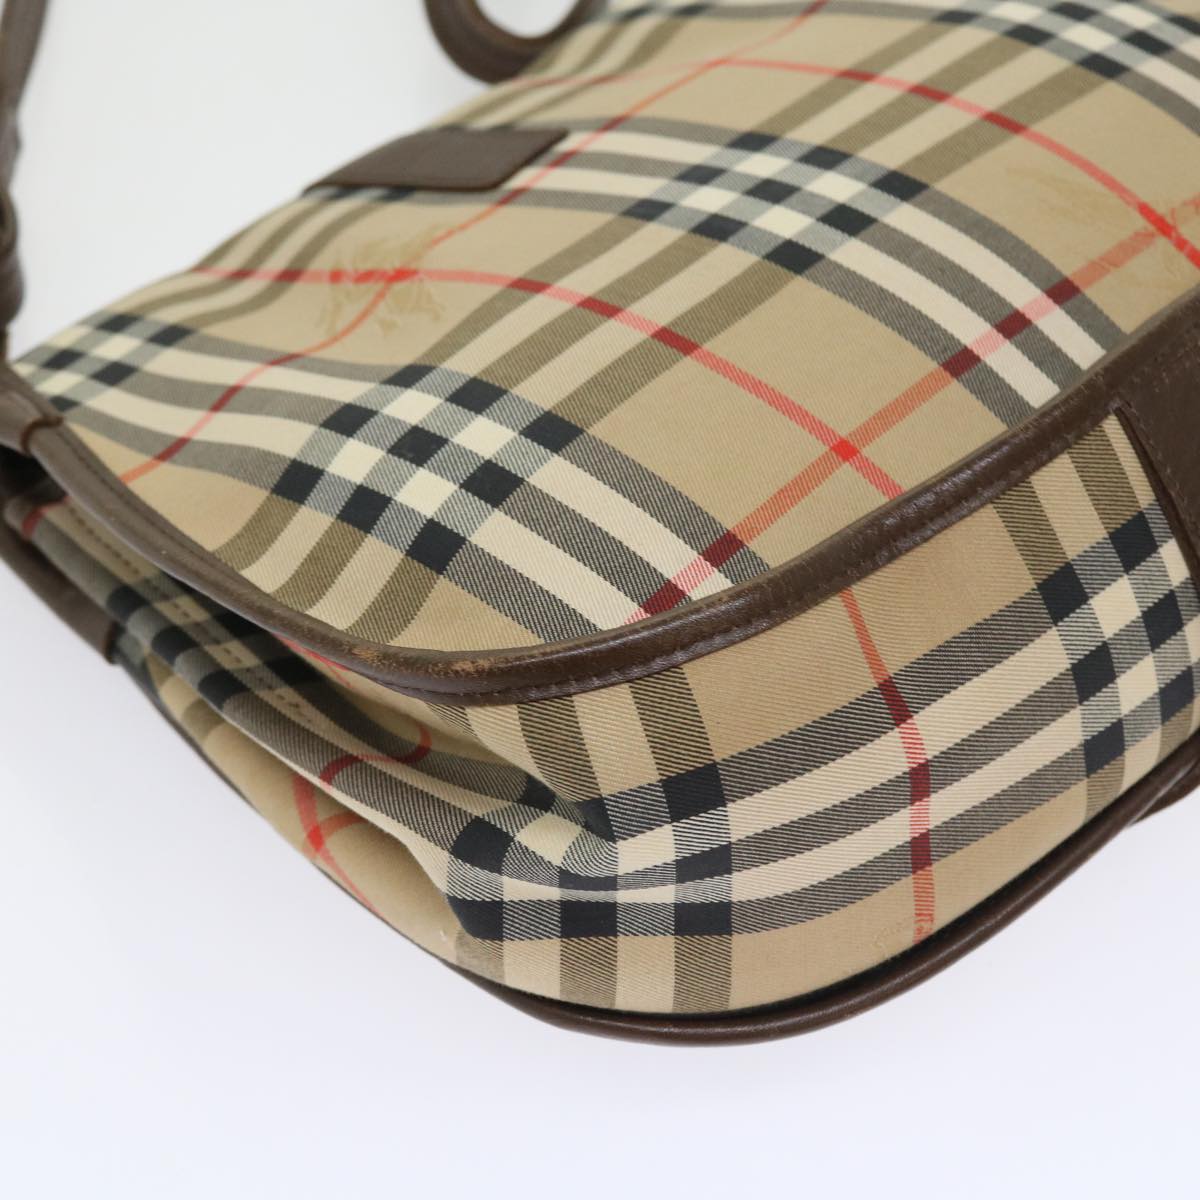 Burberrys Nova Check Shoulder Bag Canvas Leather Beige Brown Auth 54106